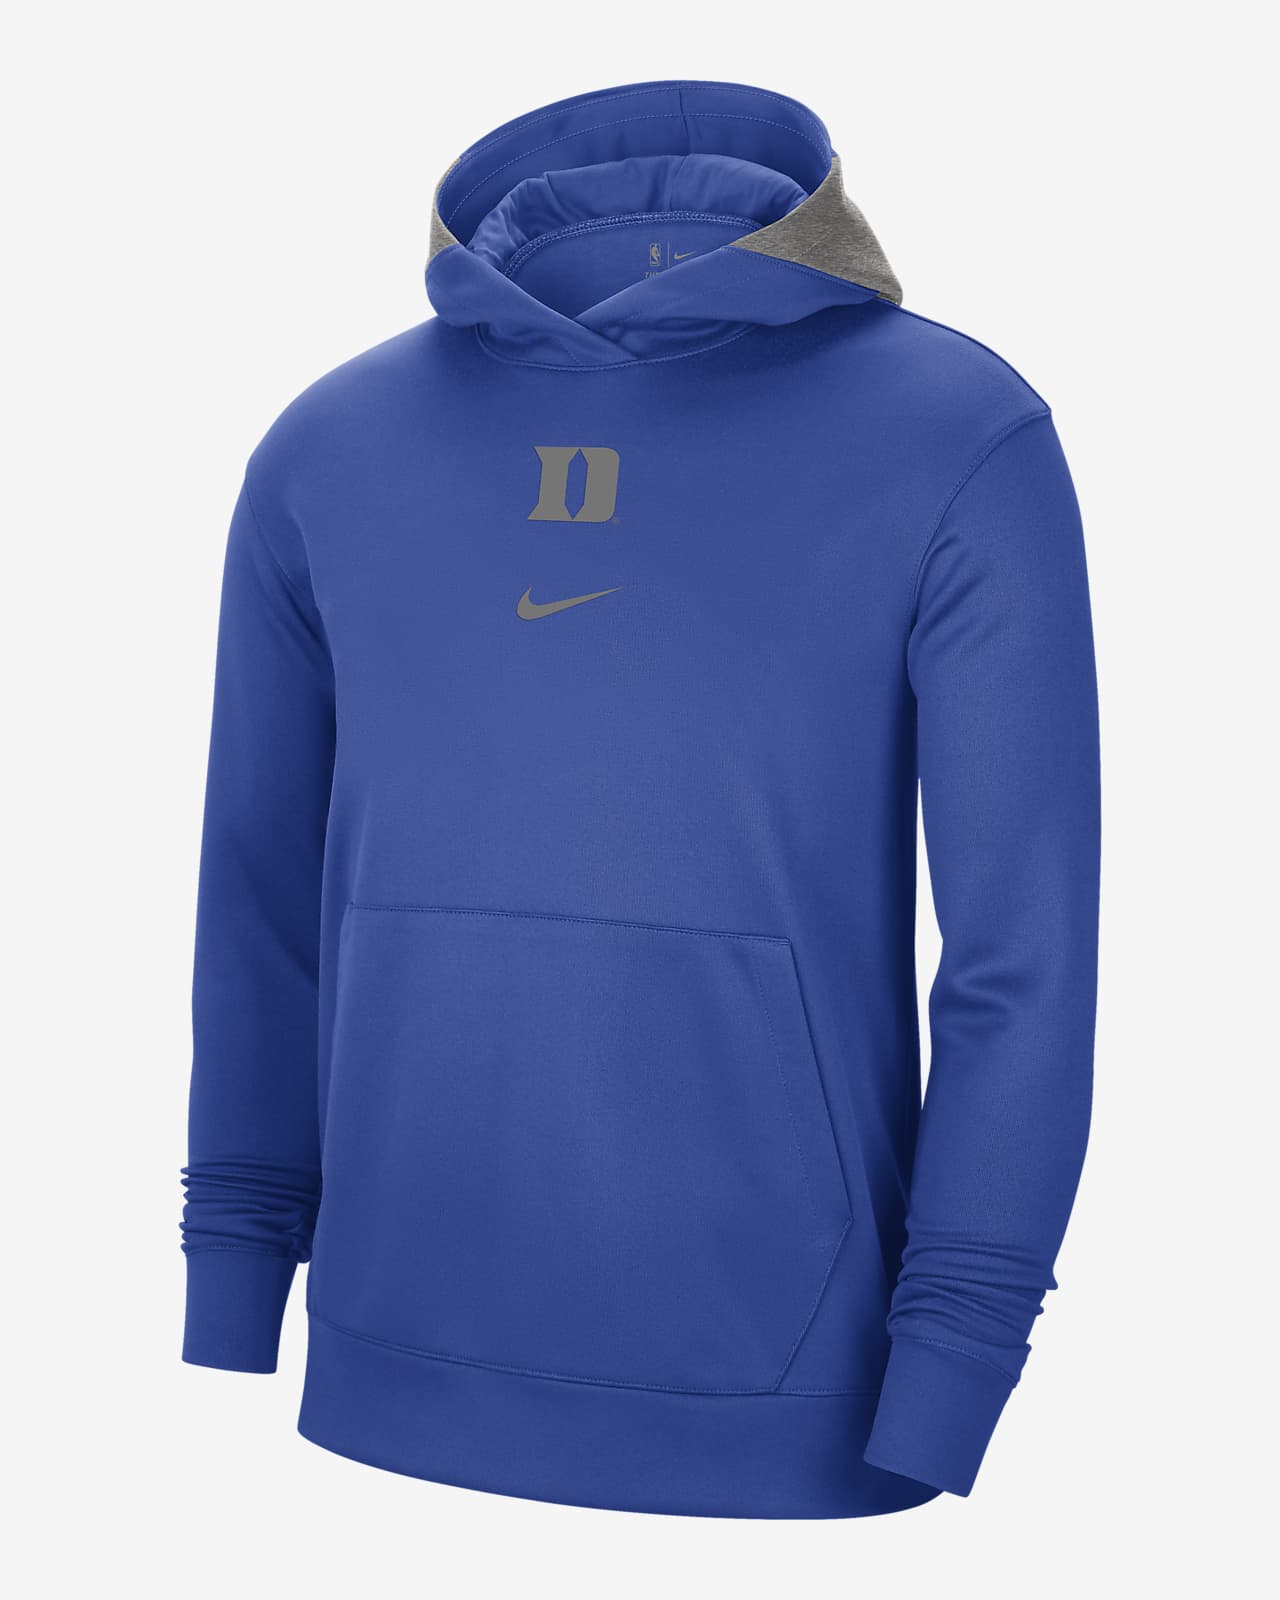 Nike College Dri-FIT Spotlight (Duke) Men's Hoodie